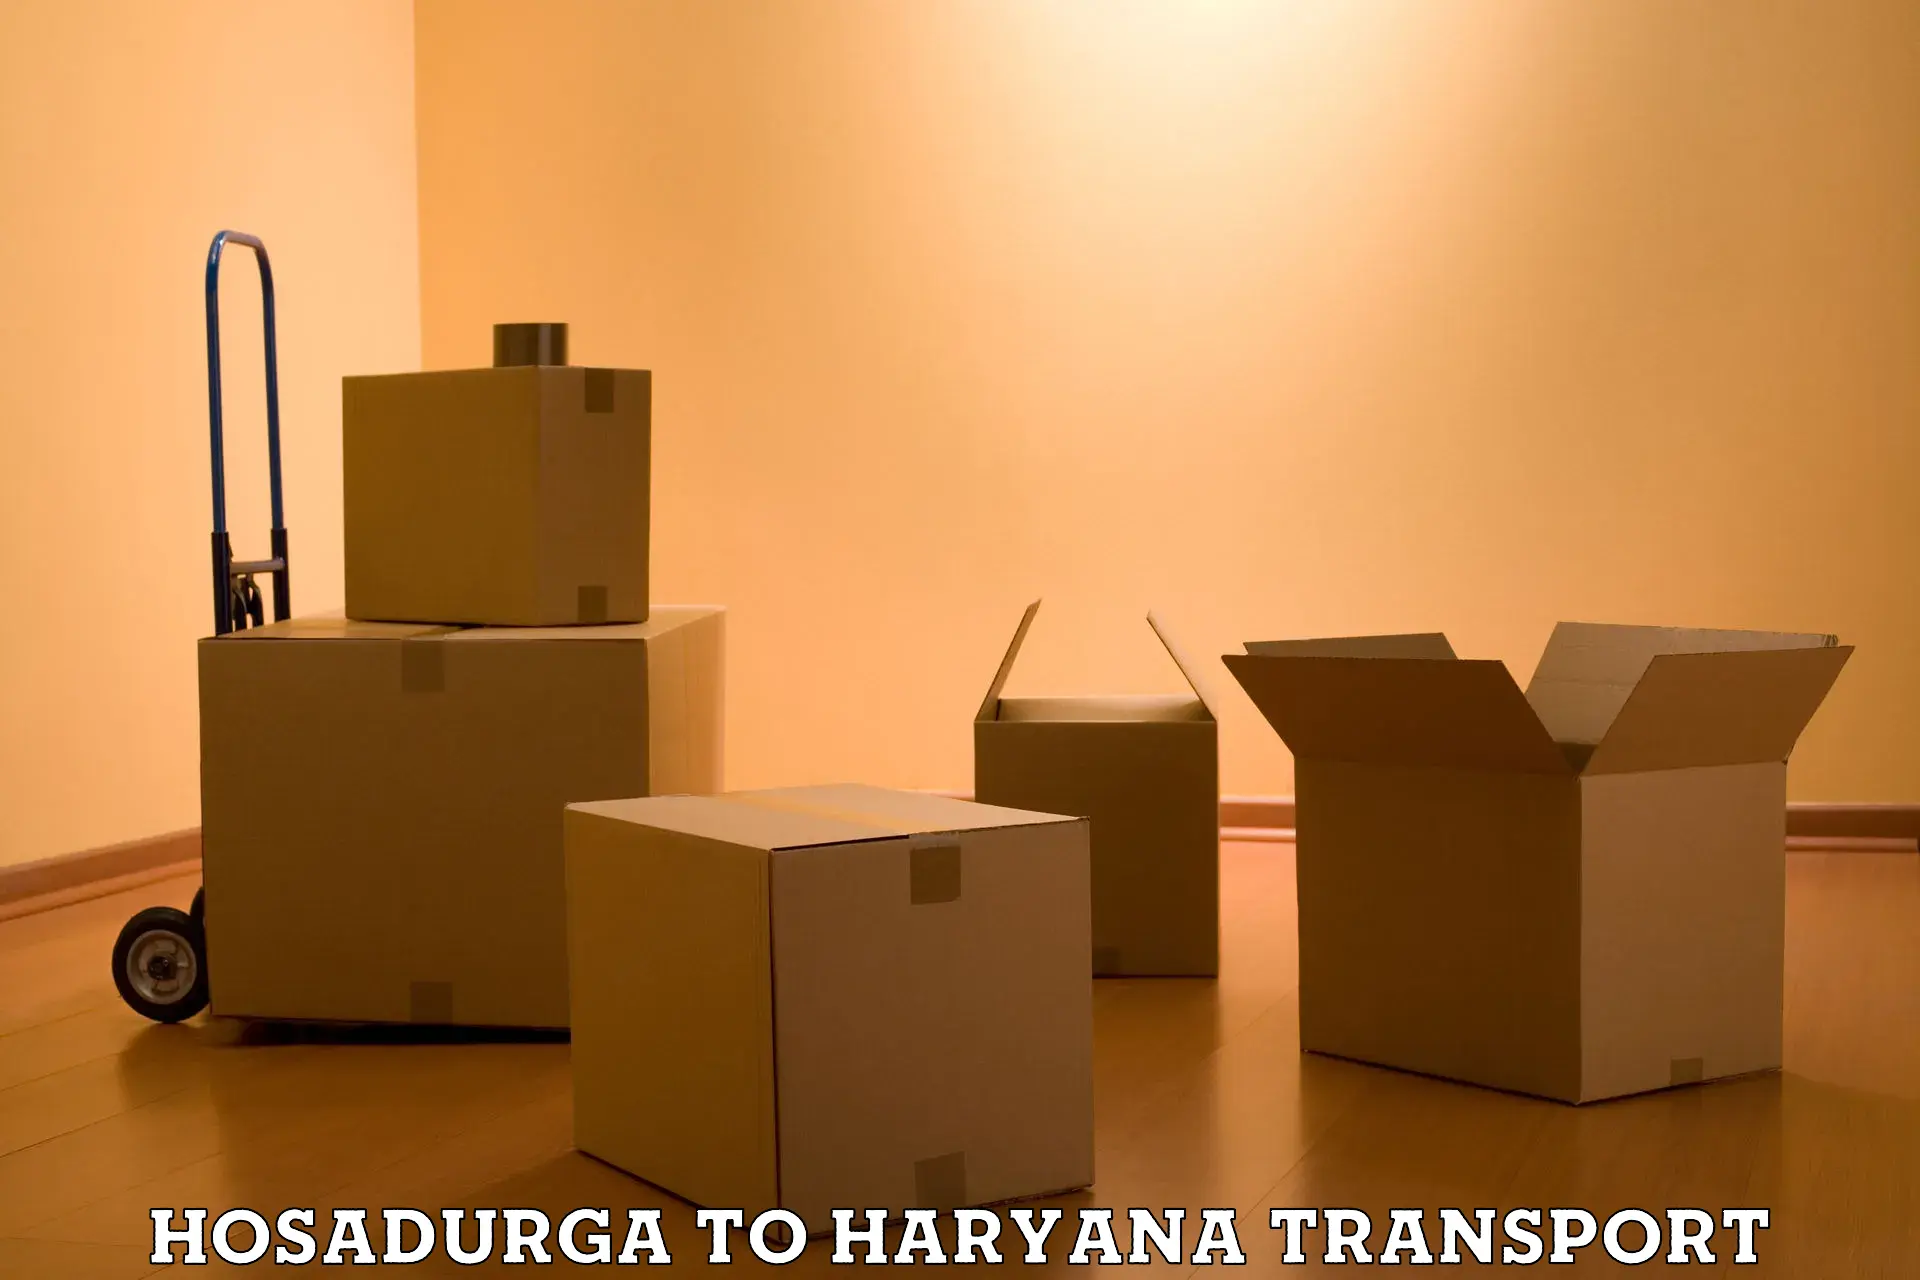 Transport in sharing Hosadurga to Haryana